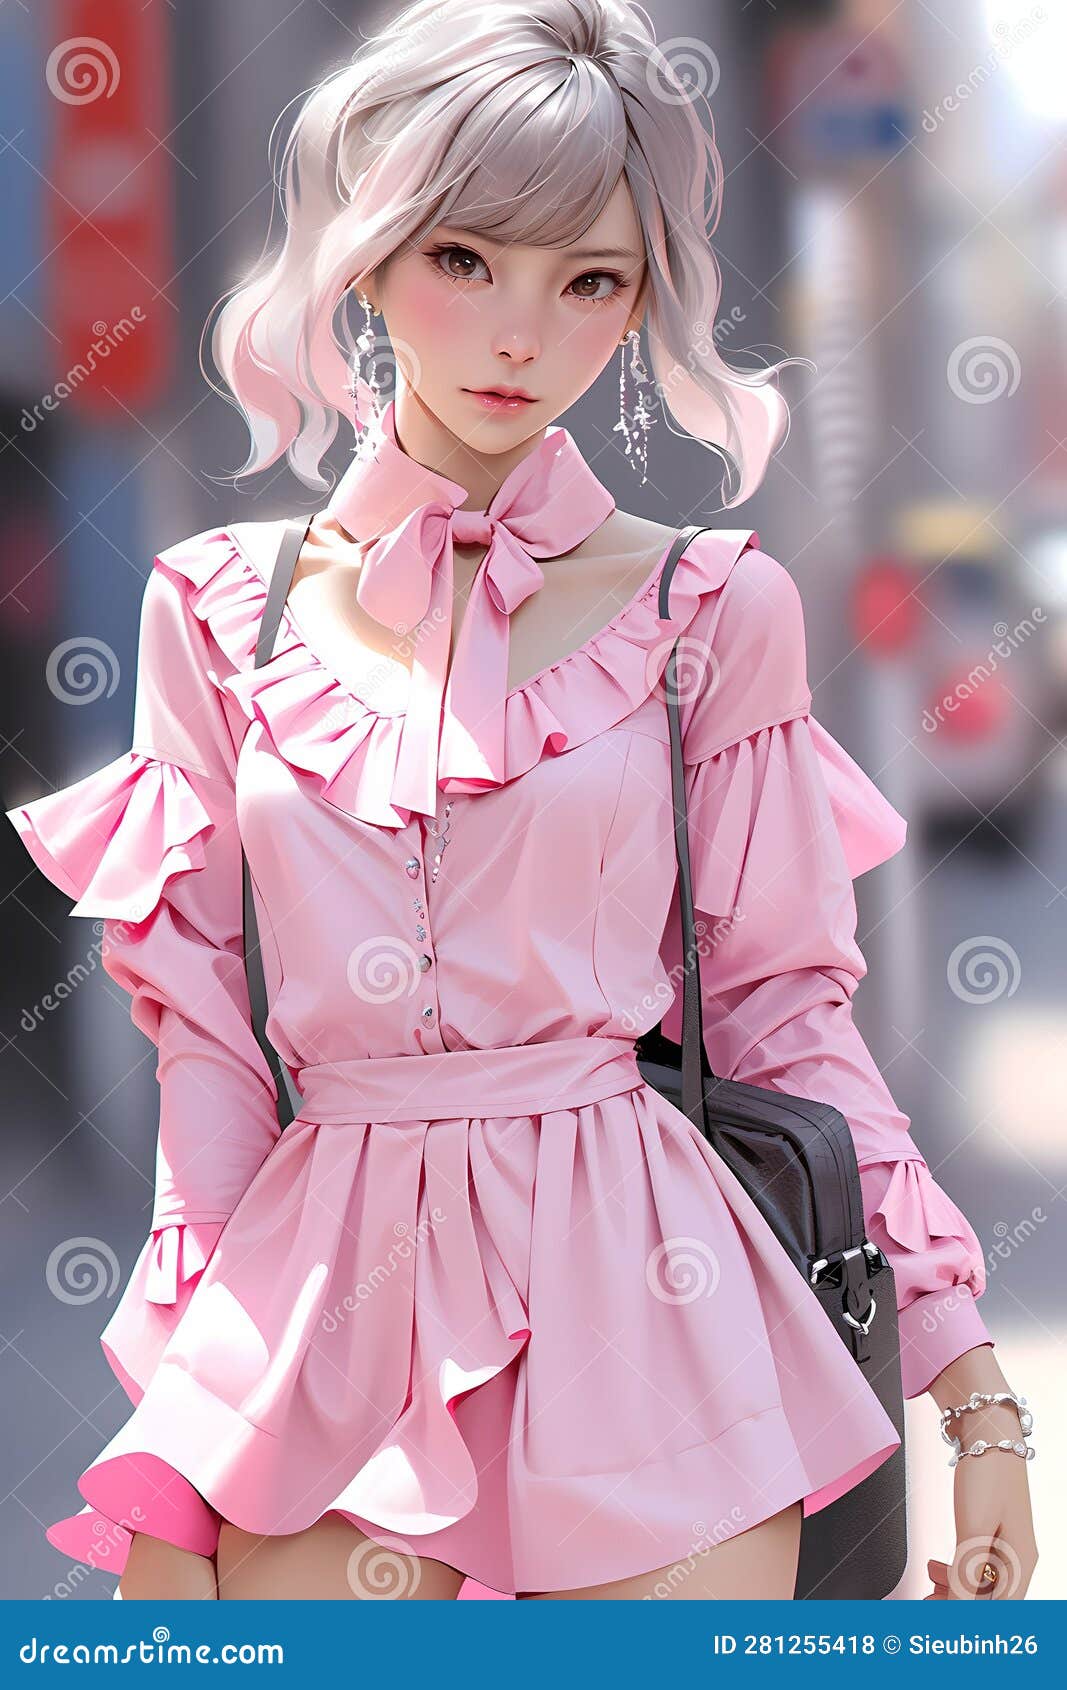 Anime Girl in Dress 60 Images  AniYukicom